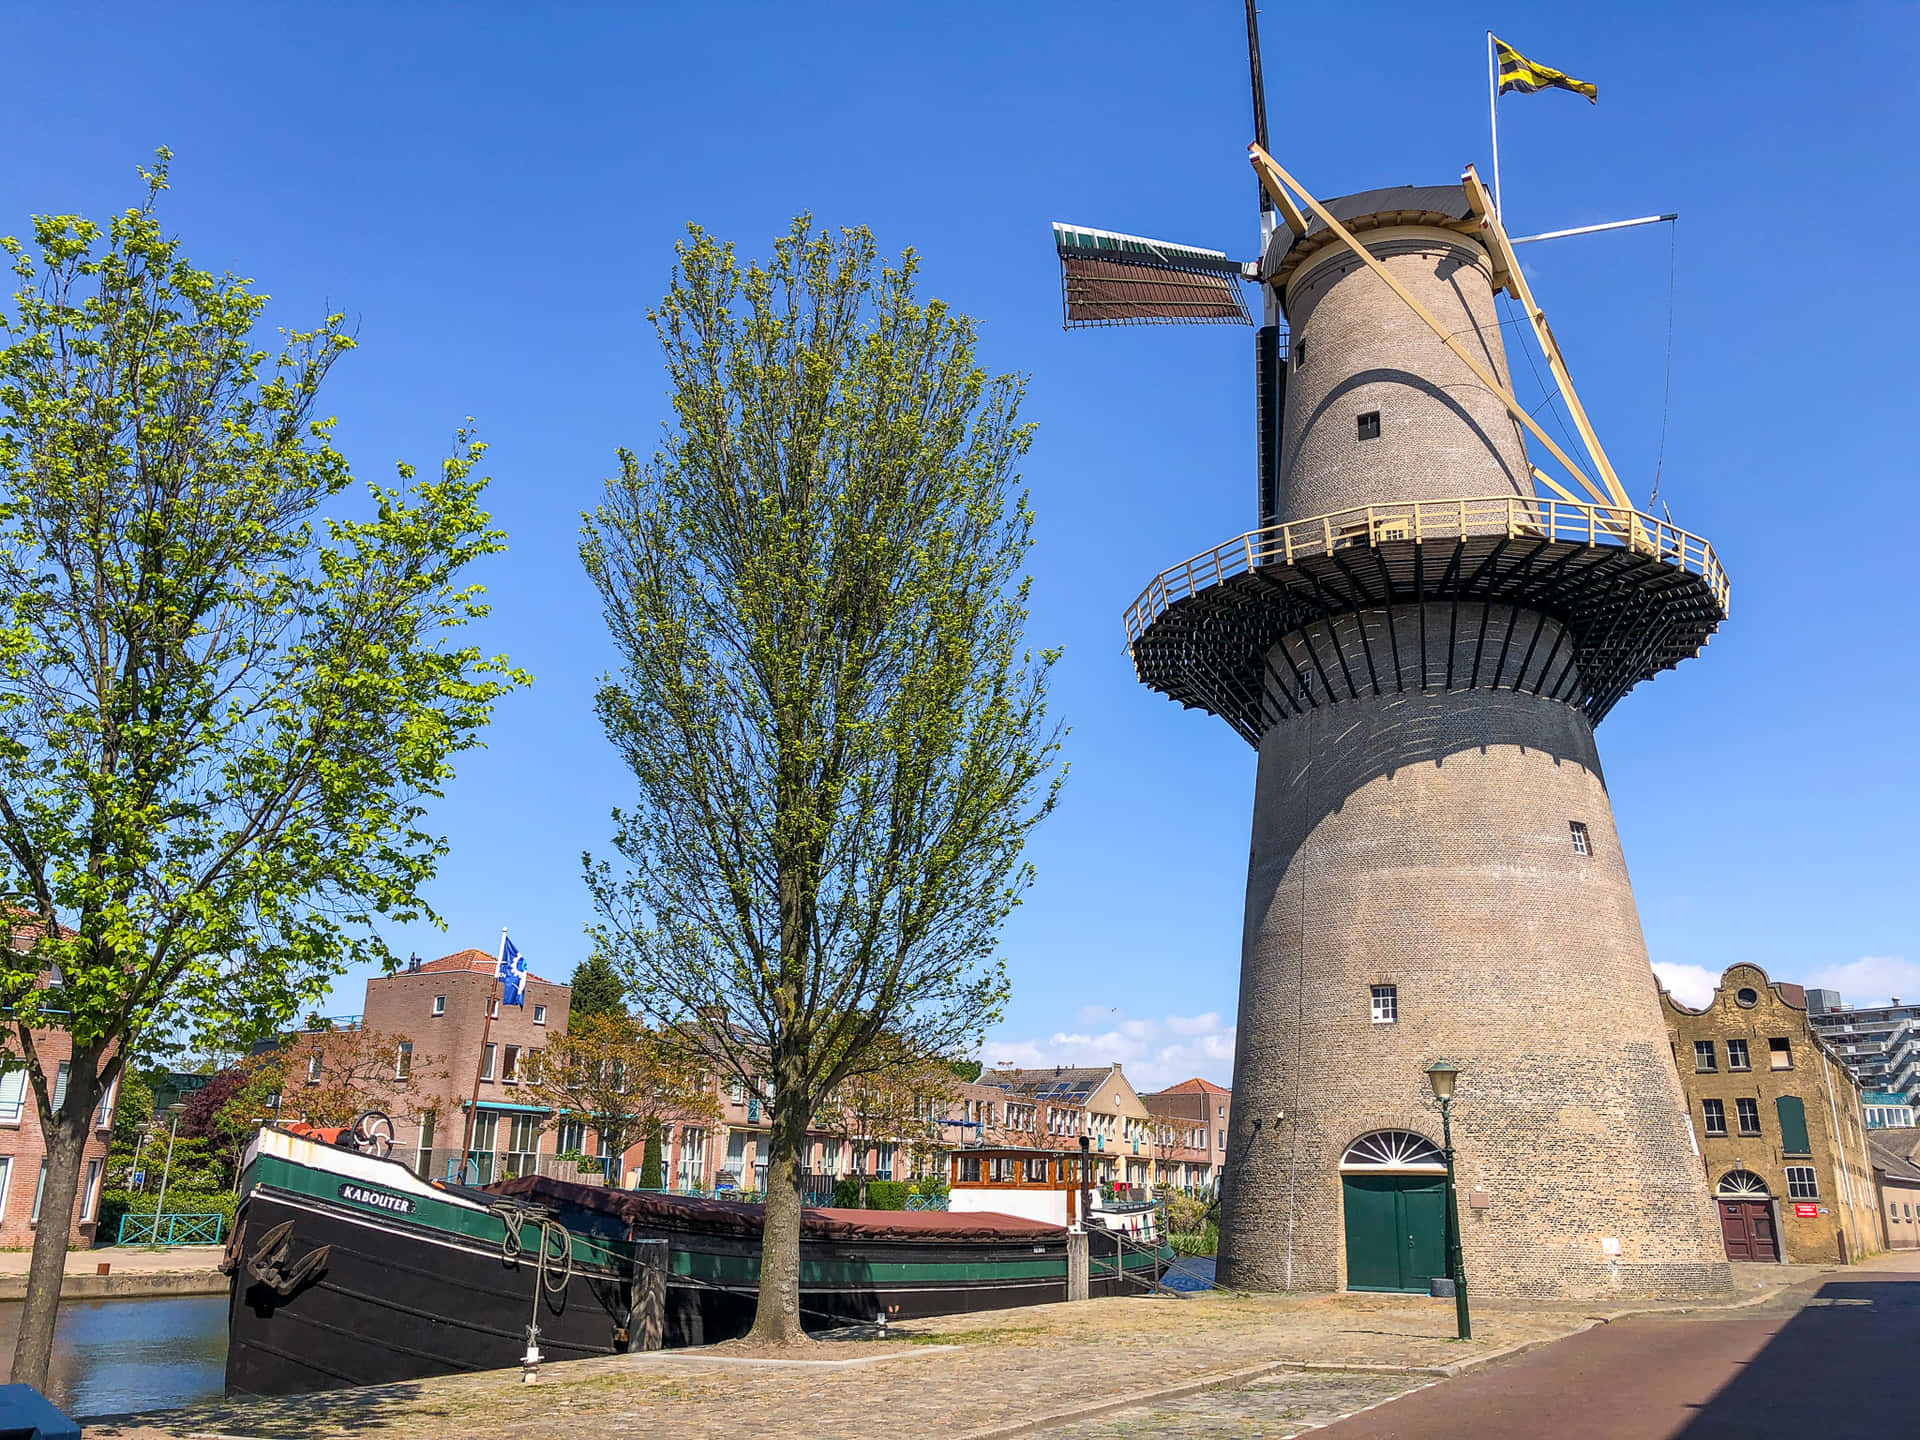 Schiedam Windmilland Canal Boat Wallpaper